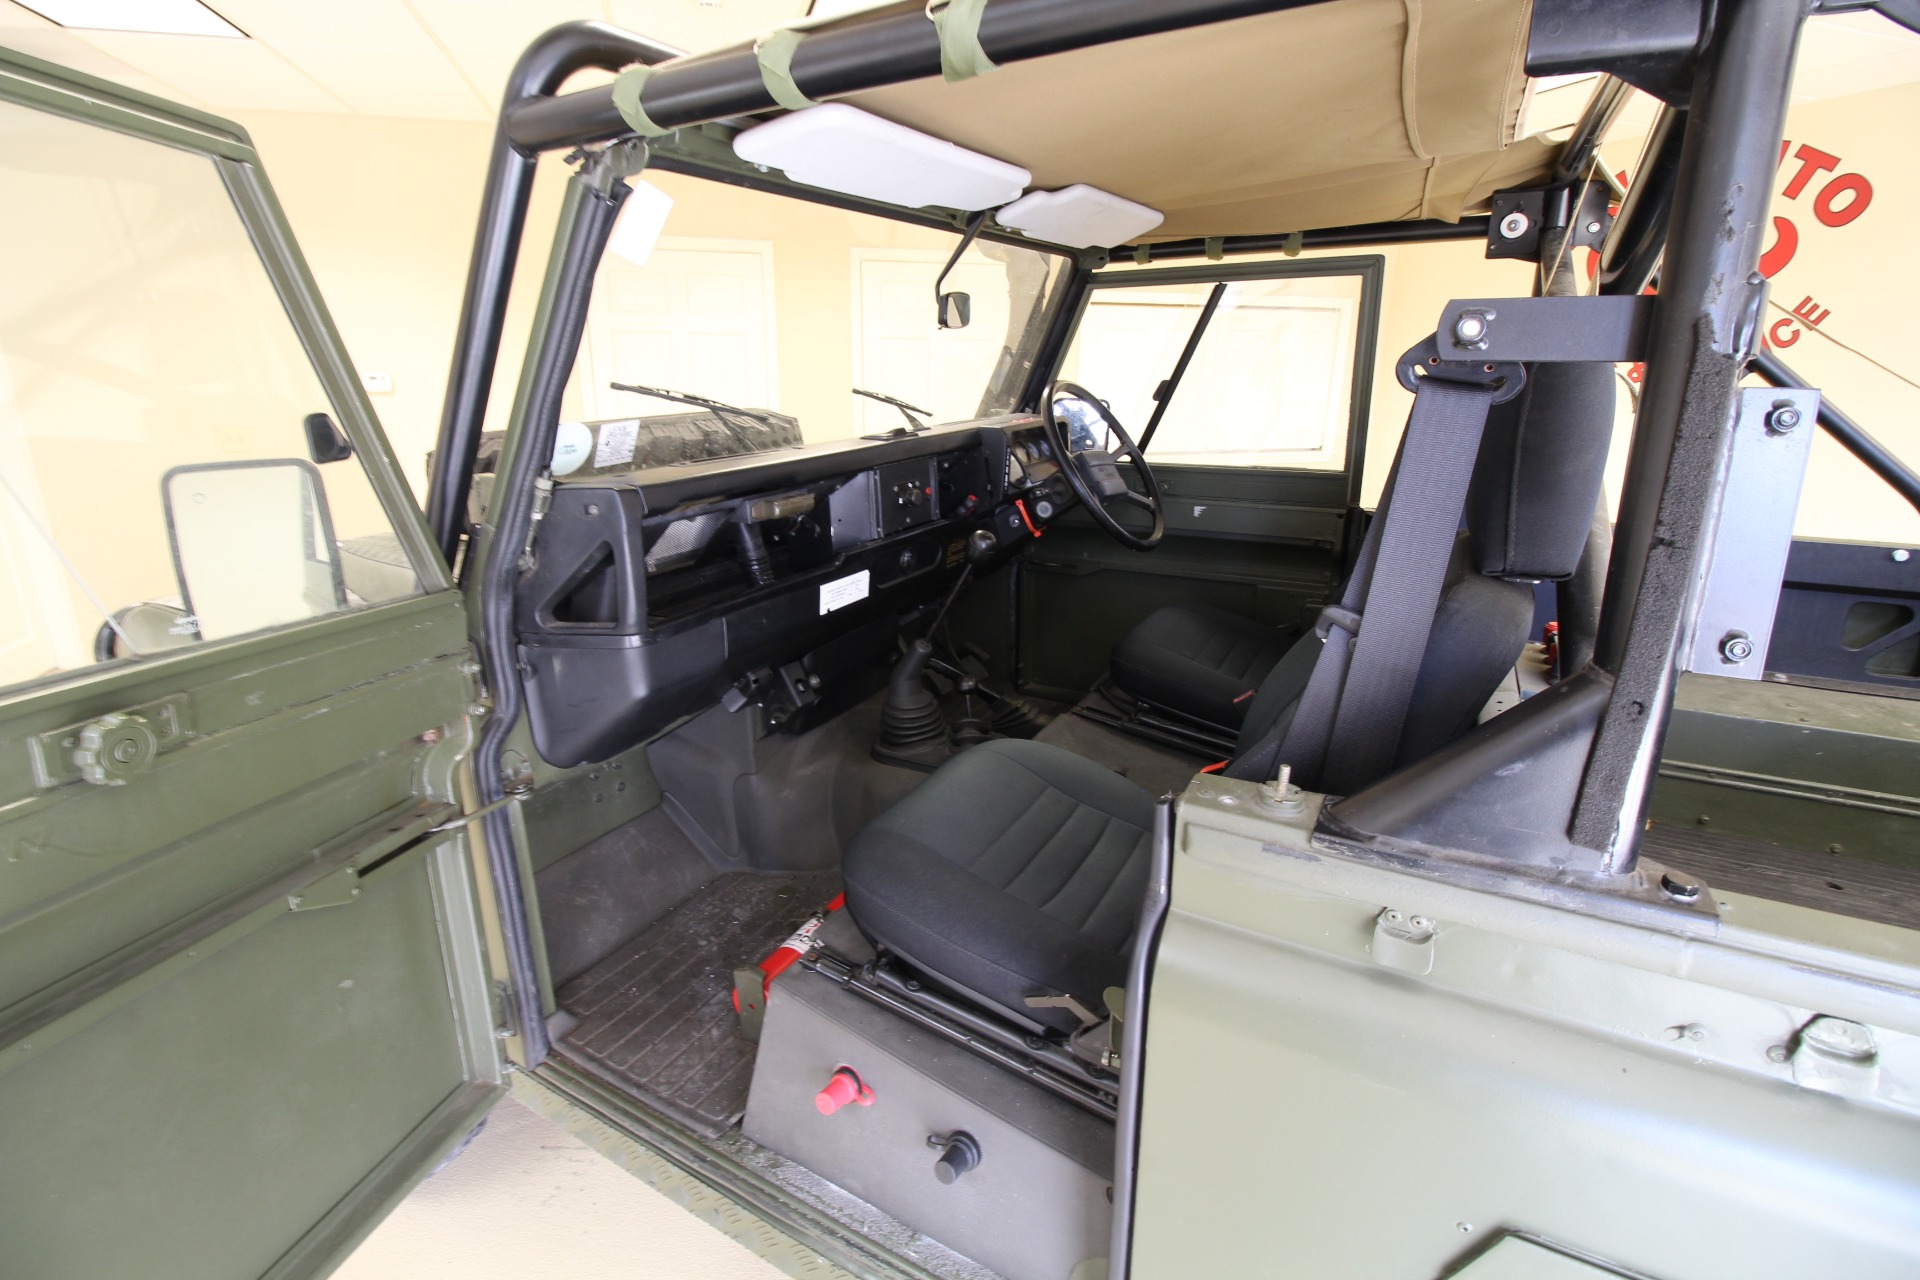 Used 1986 flat green Land Rover Defender D110 110 military | Albany, NY